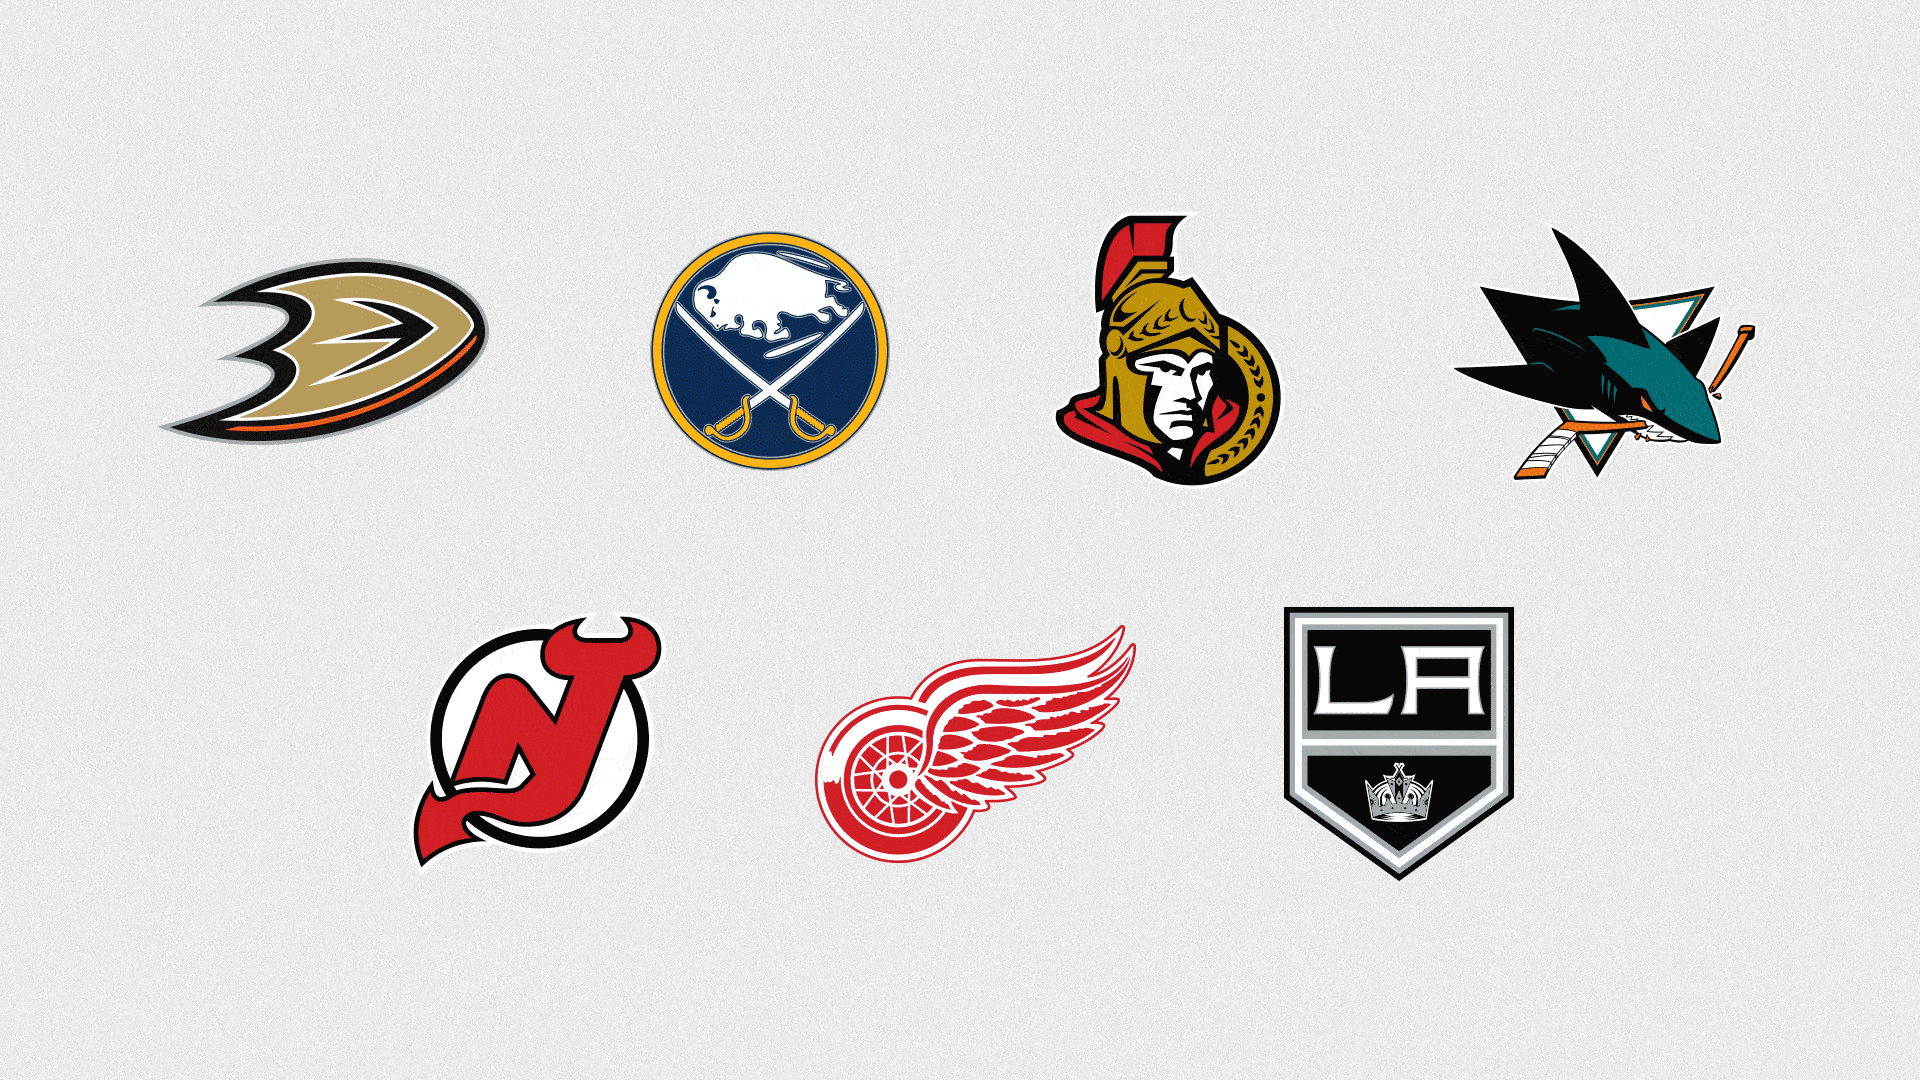 Illustration of NHL teams (Ducks, Kings, Sharks, Sabres, Devils, Senators, Red Wings) logo's disappearing